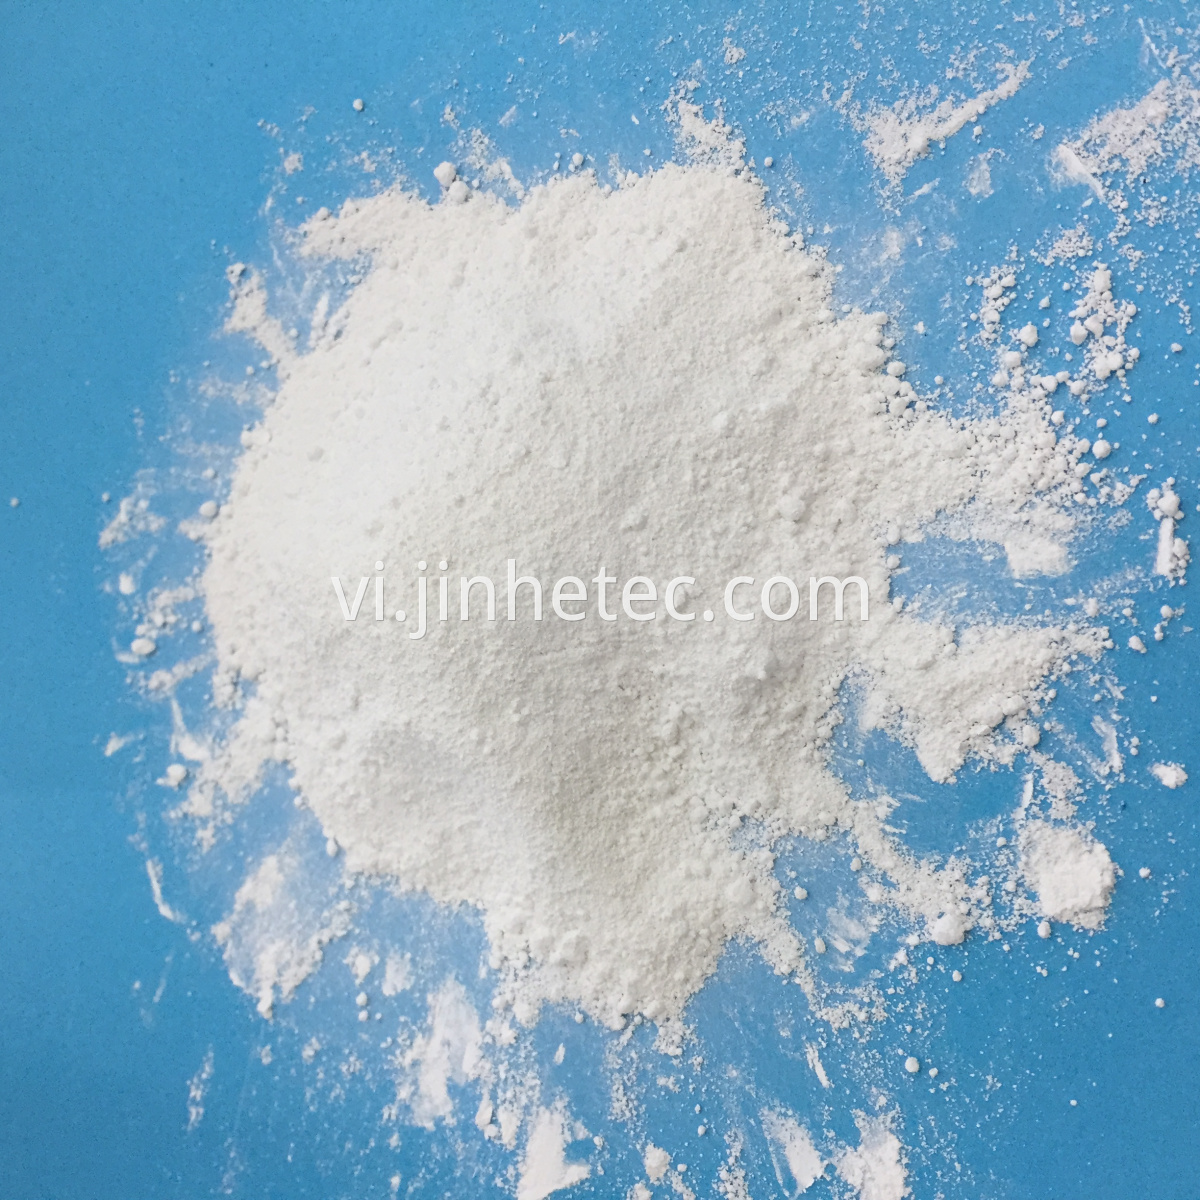 Soluryl Pvc Paste Resin Pg680 EL103 Emulsion Grade